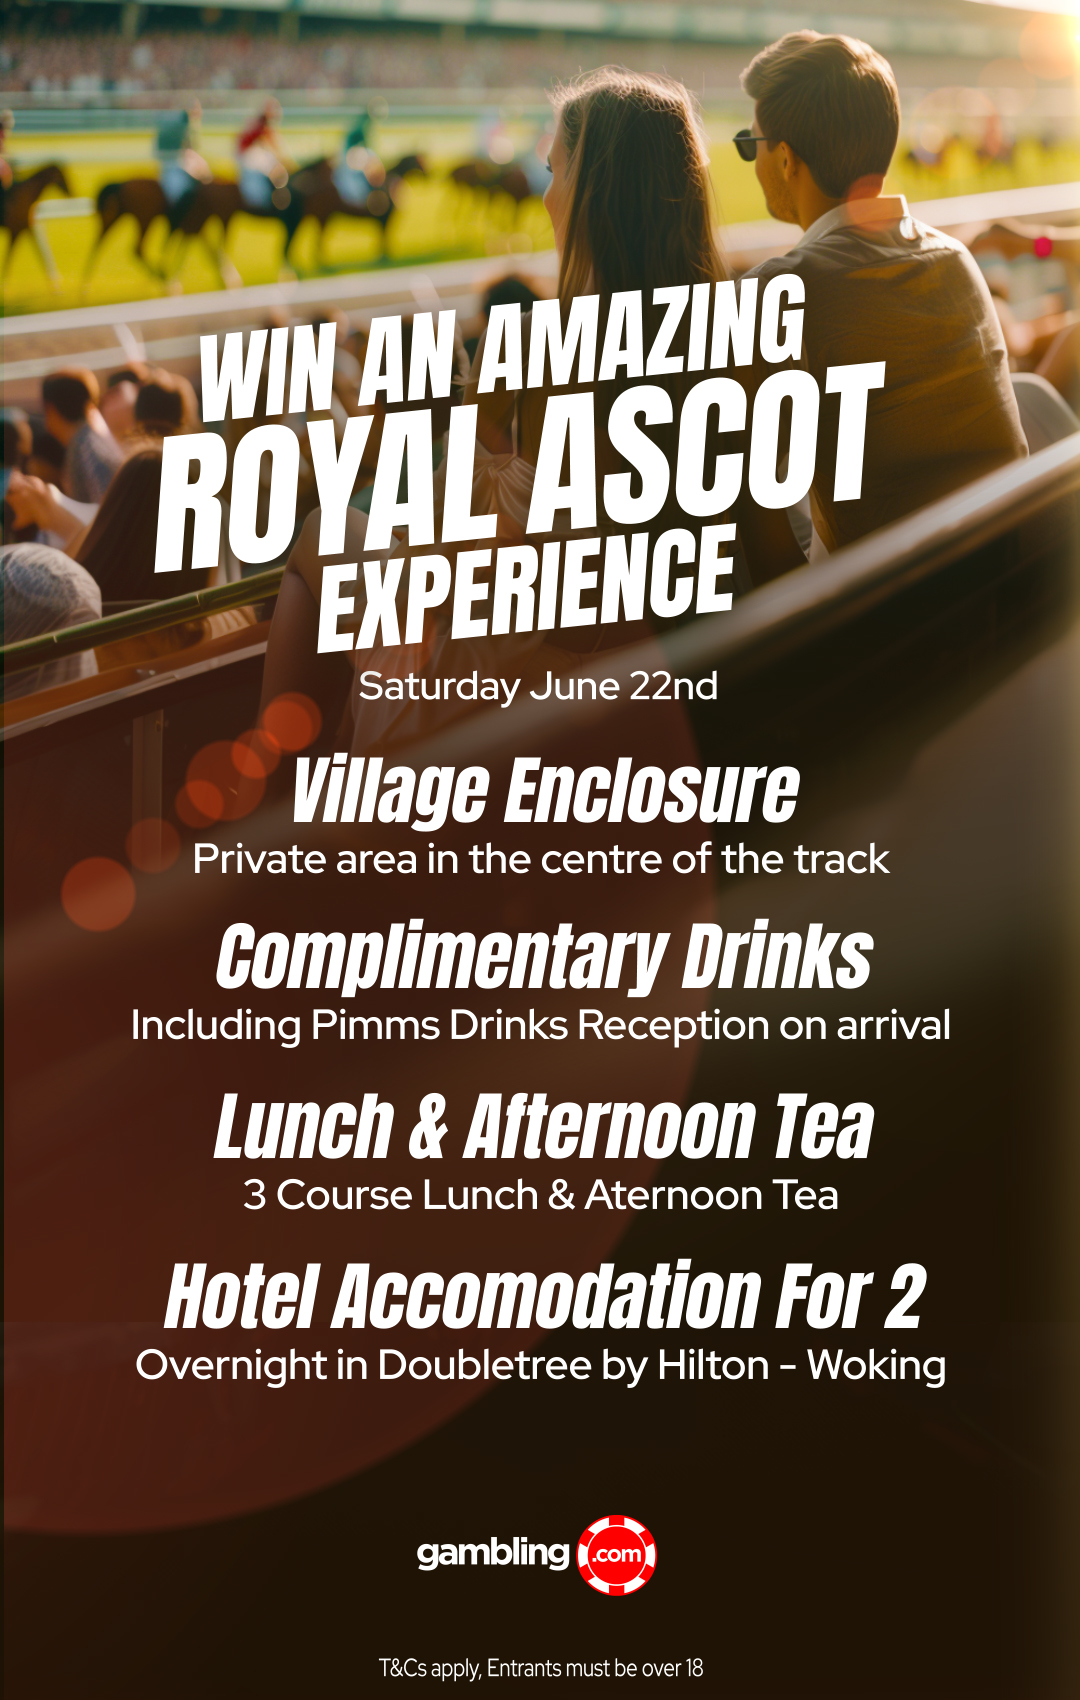 Win a trip to Royal Ascot with&nbsp;Gambling.com